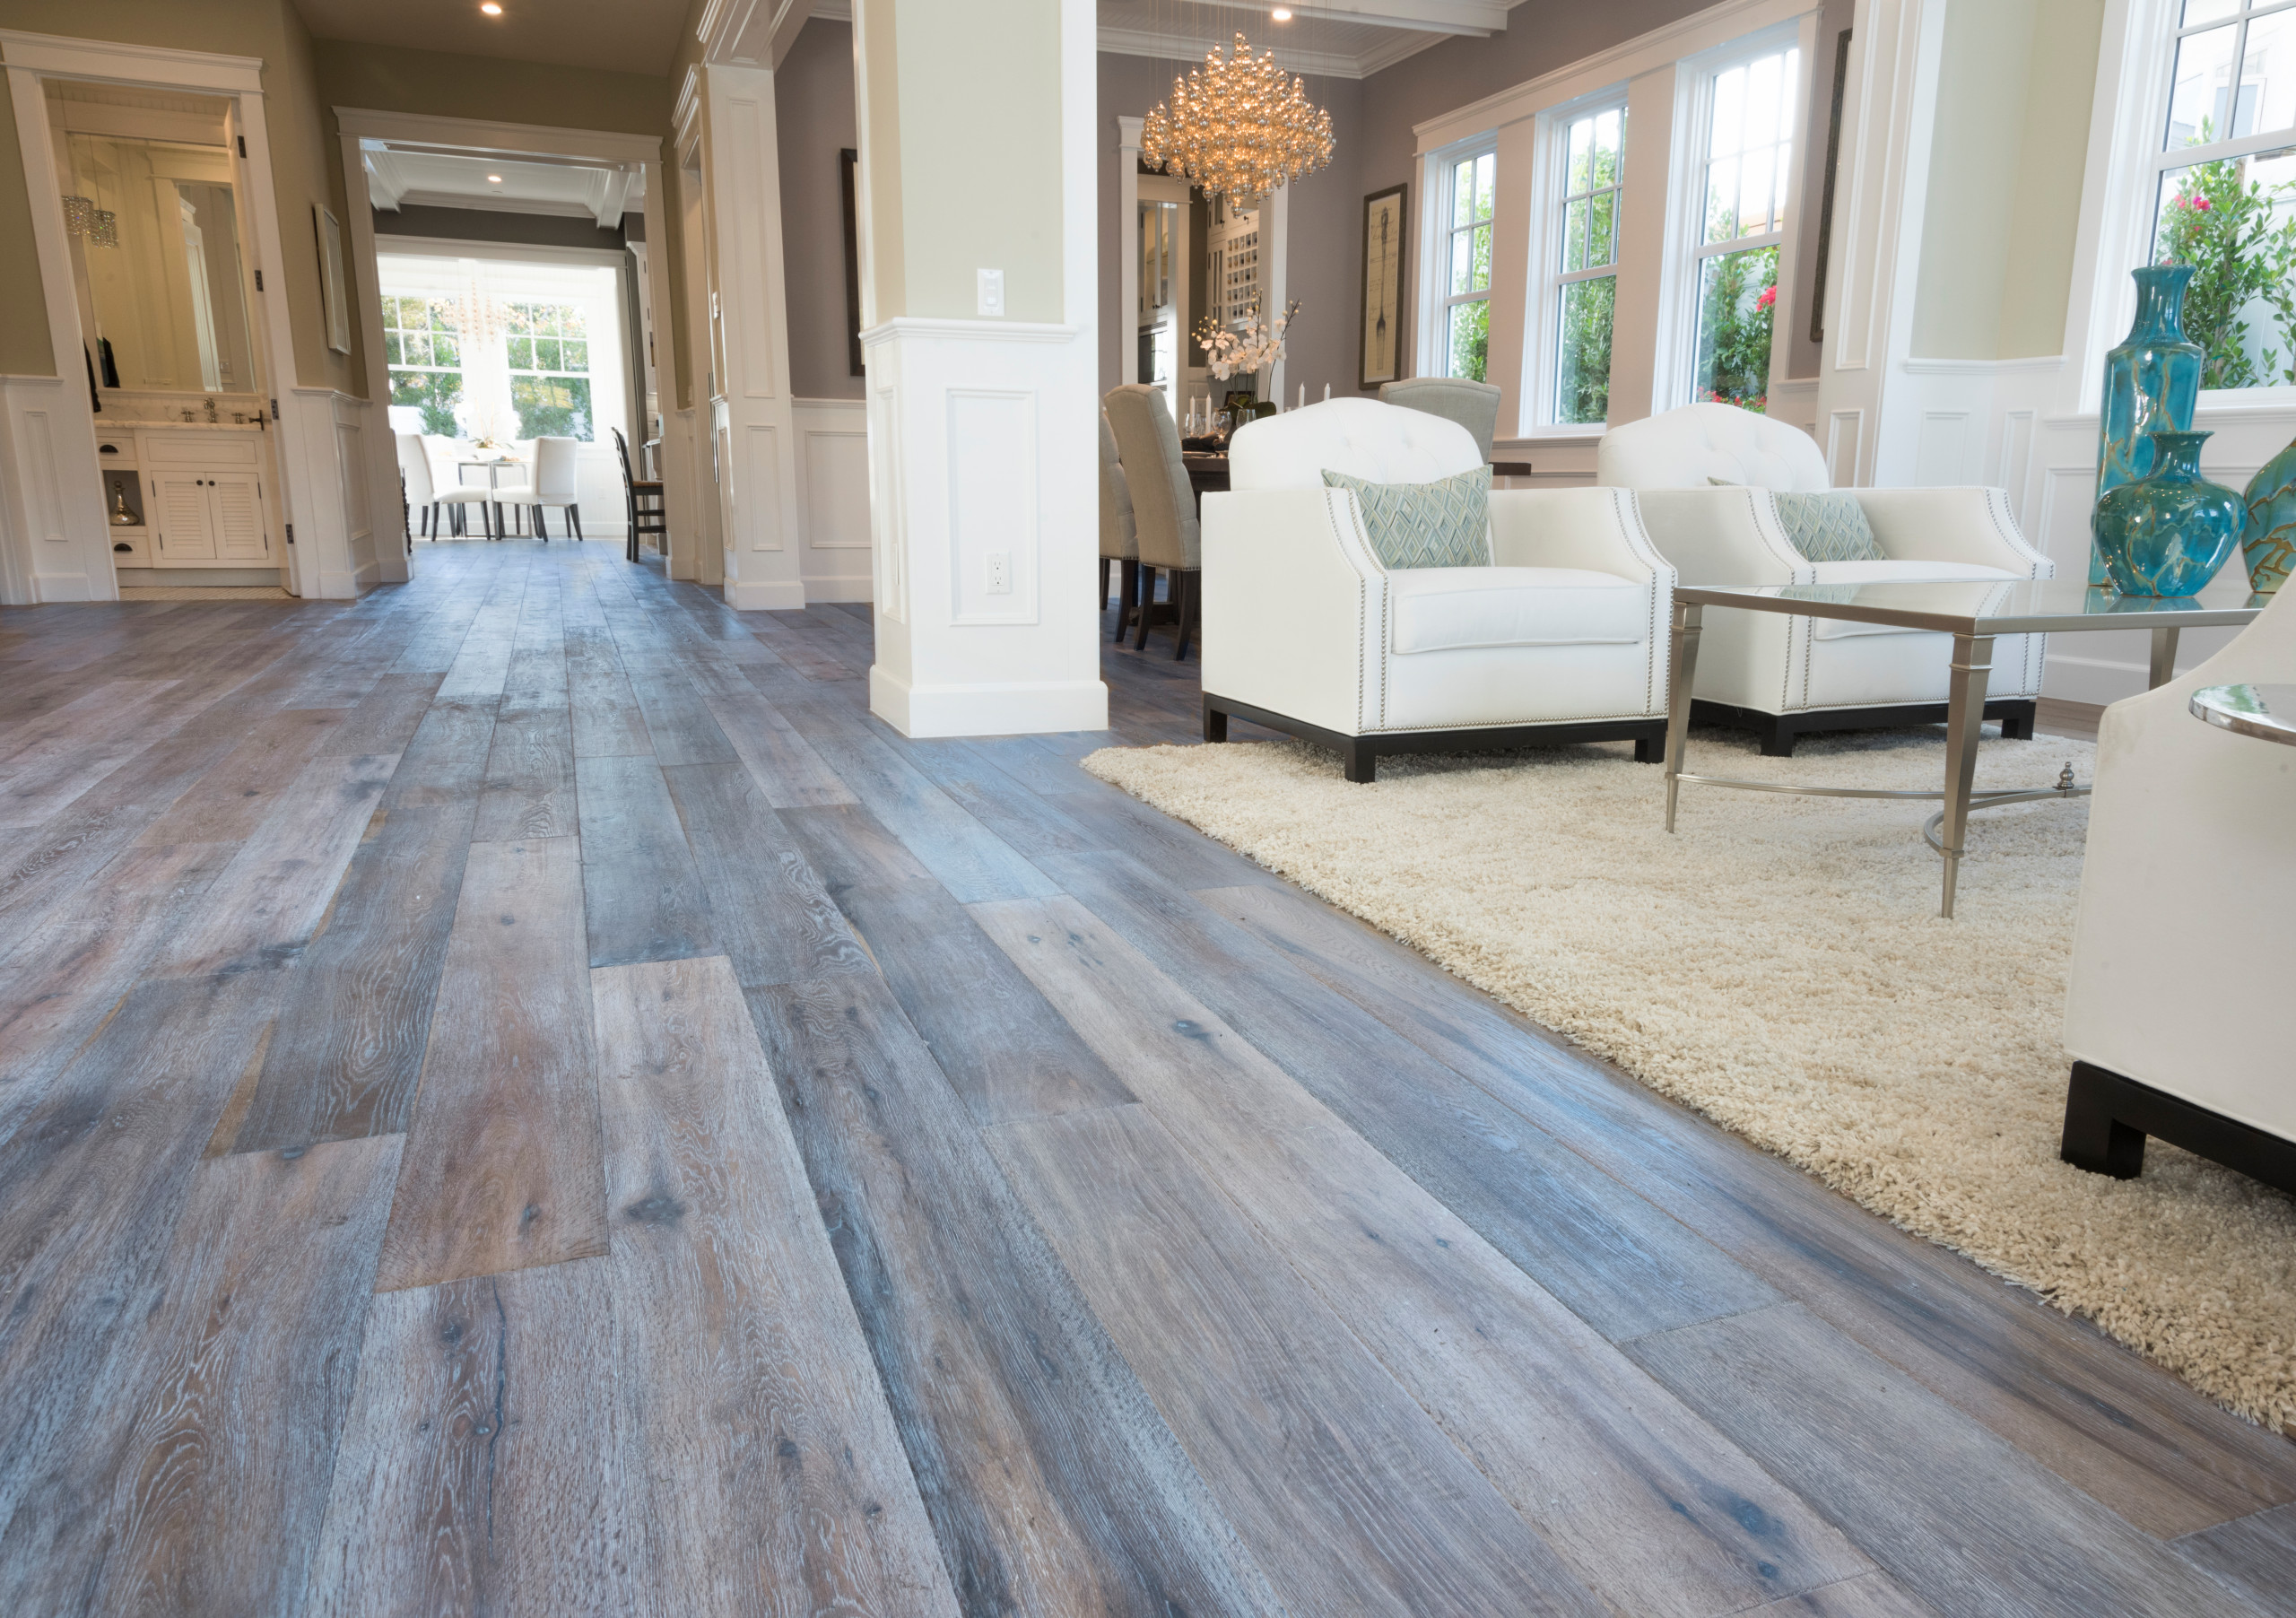 Utilizing Deep Smoked Oak Flooring, Cape Cod Hardwood Floors